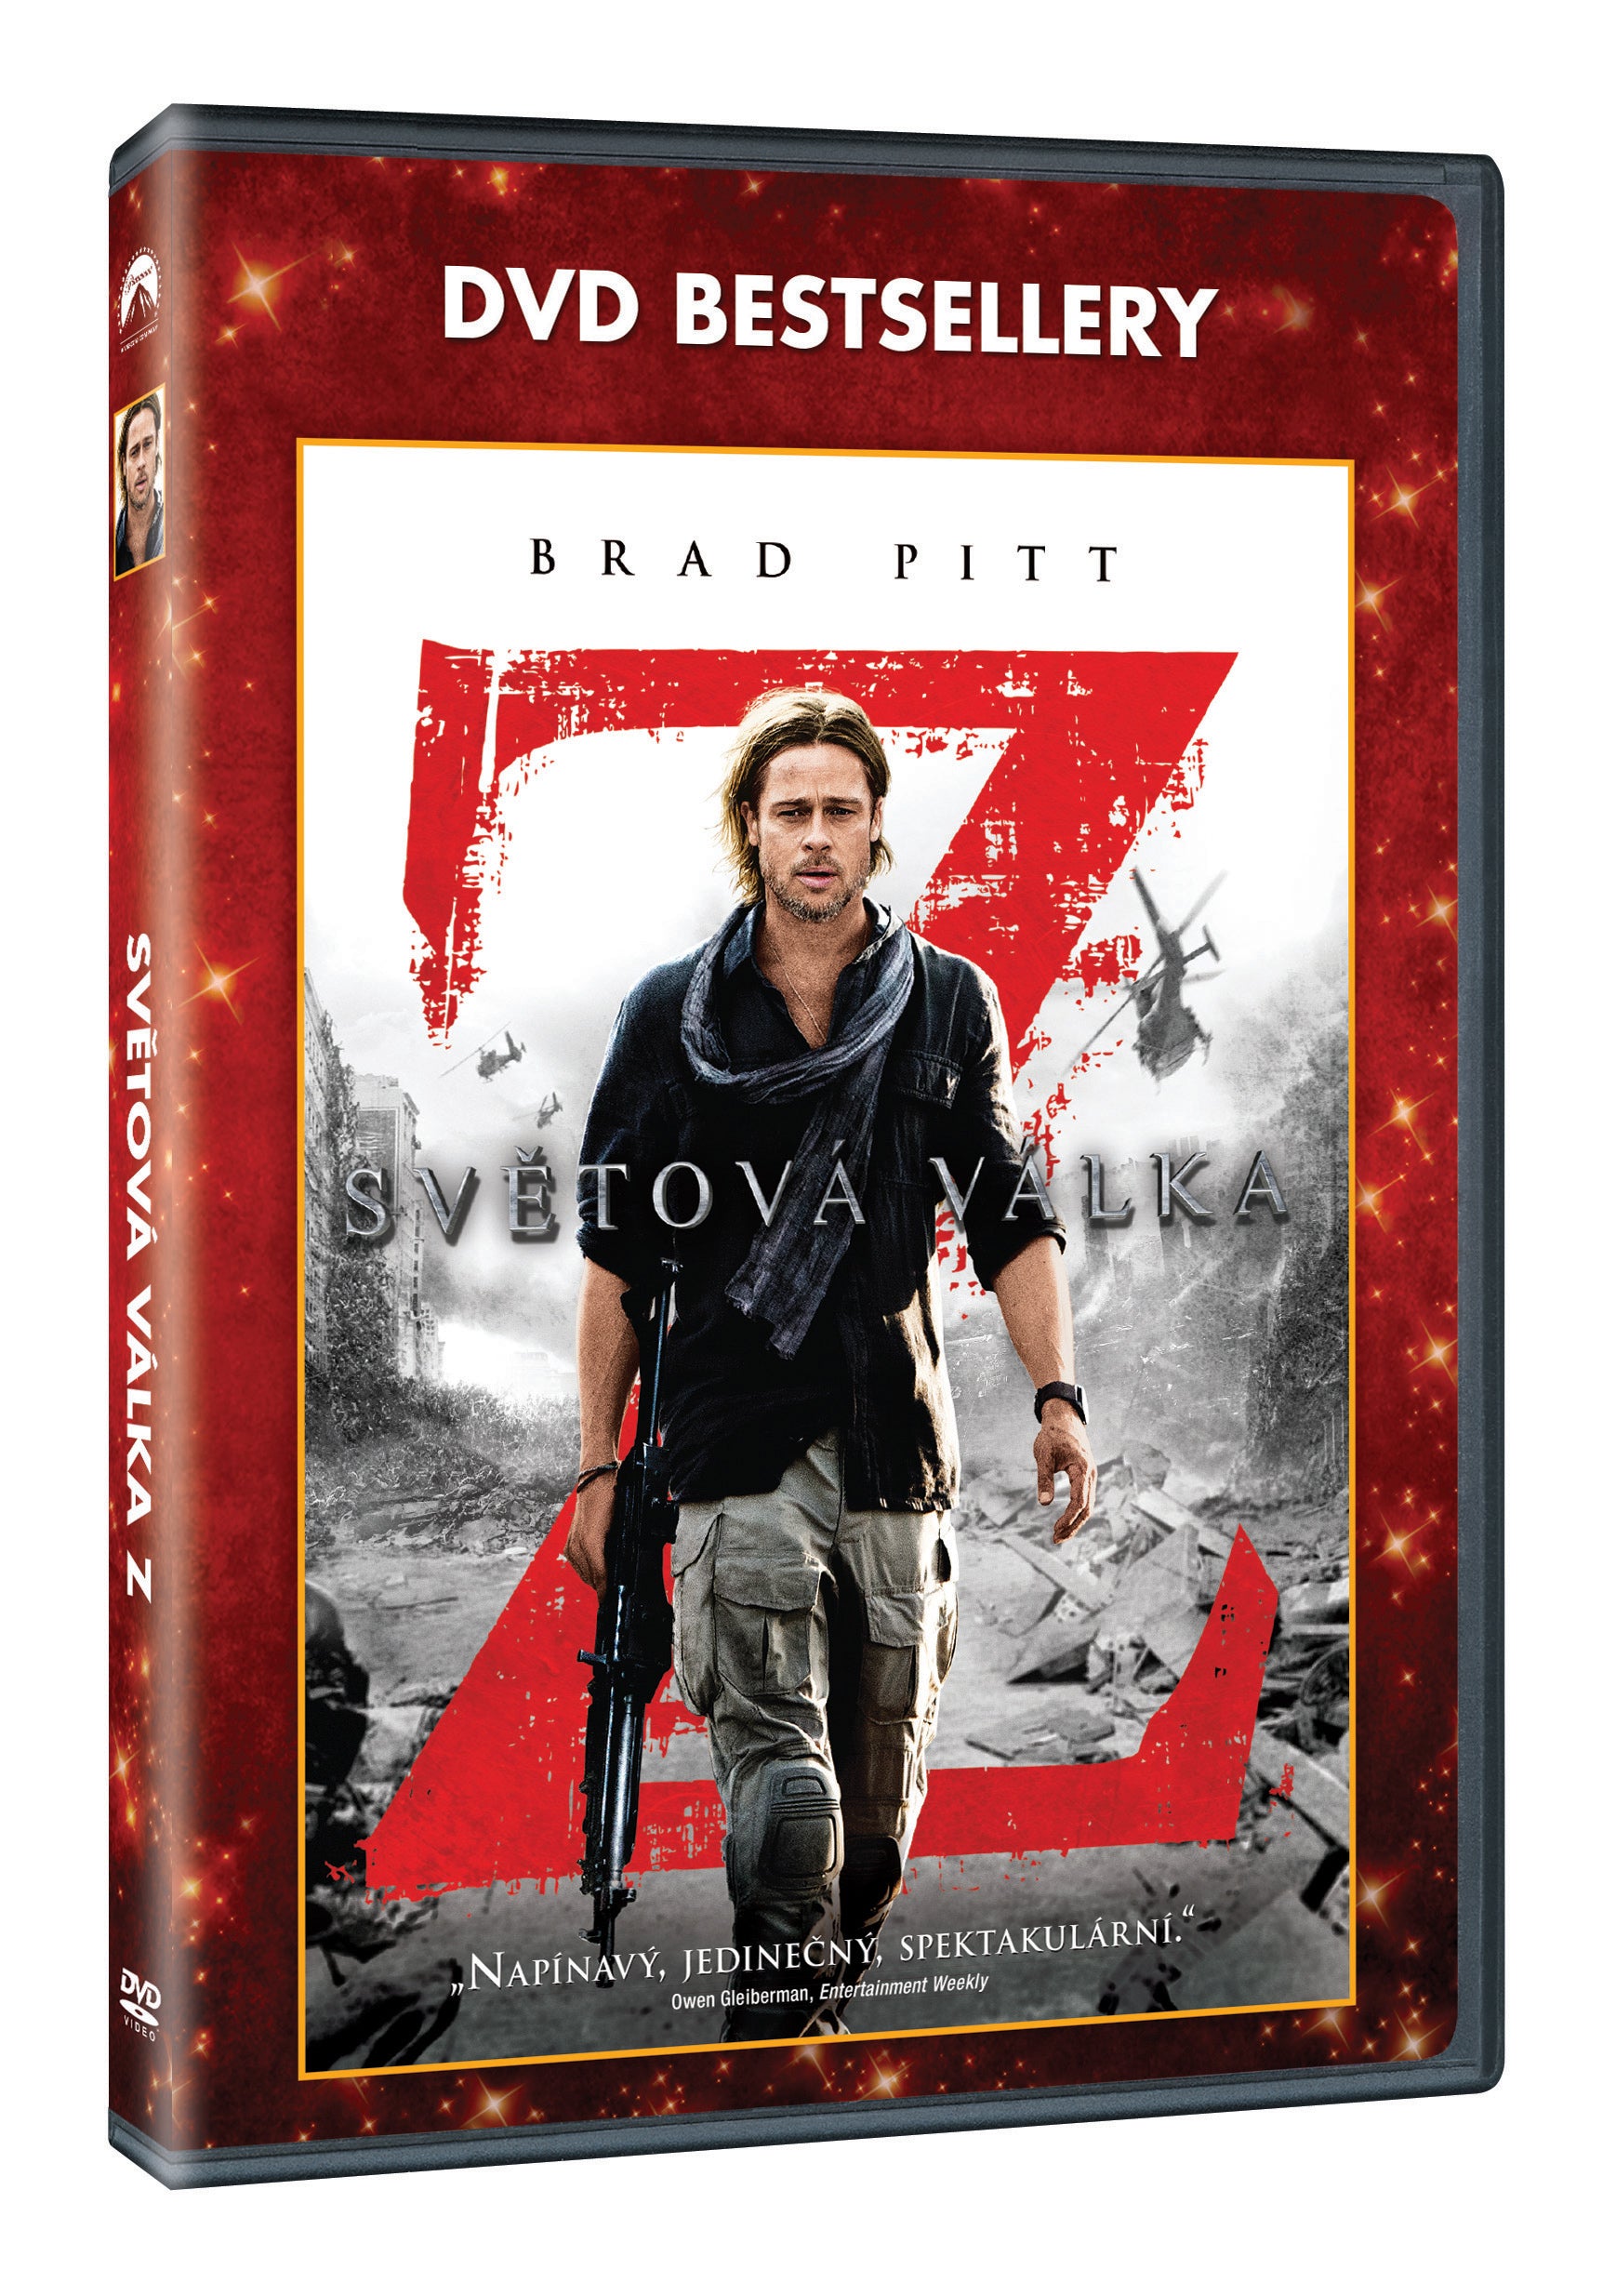 Svetova valka Z DVD - Edice DVD bestsellery / World War Z